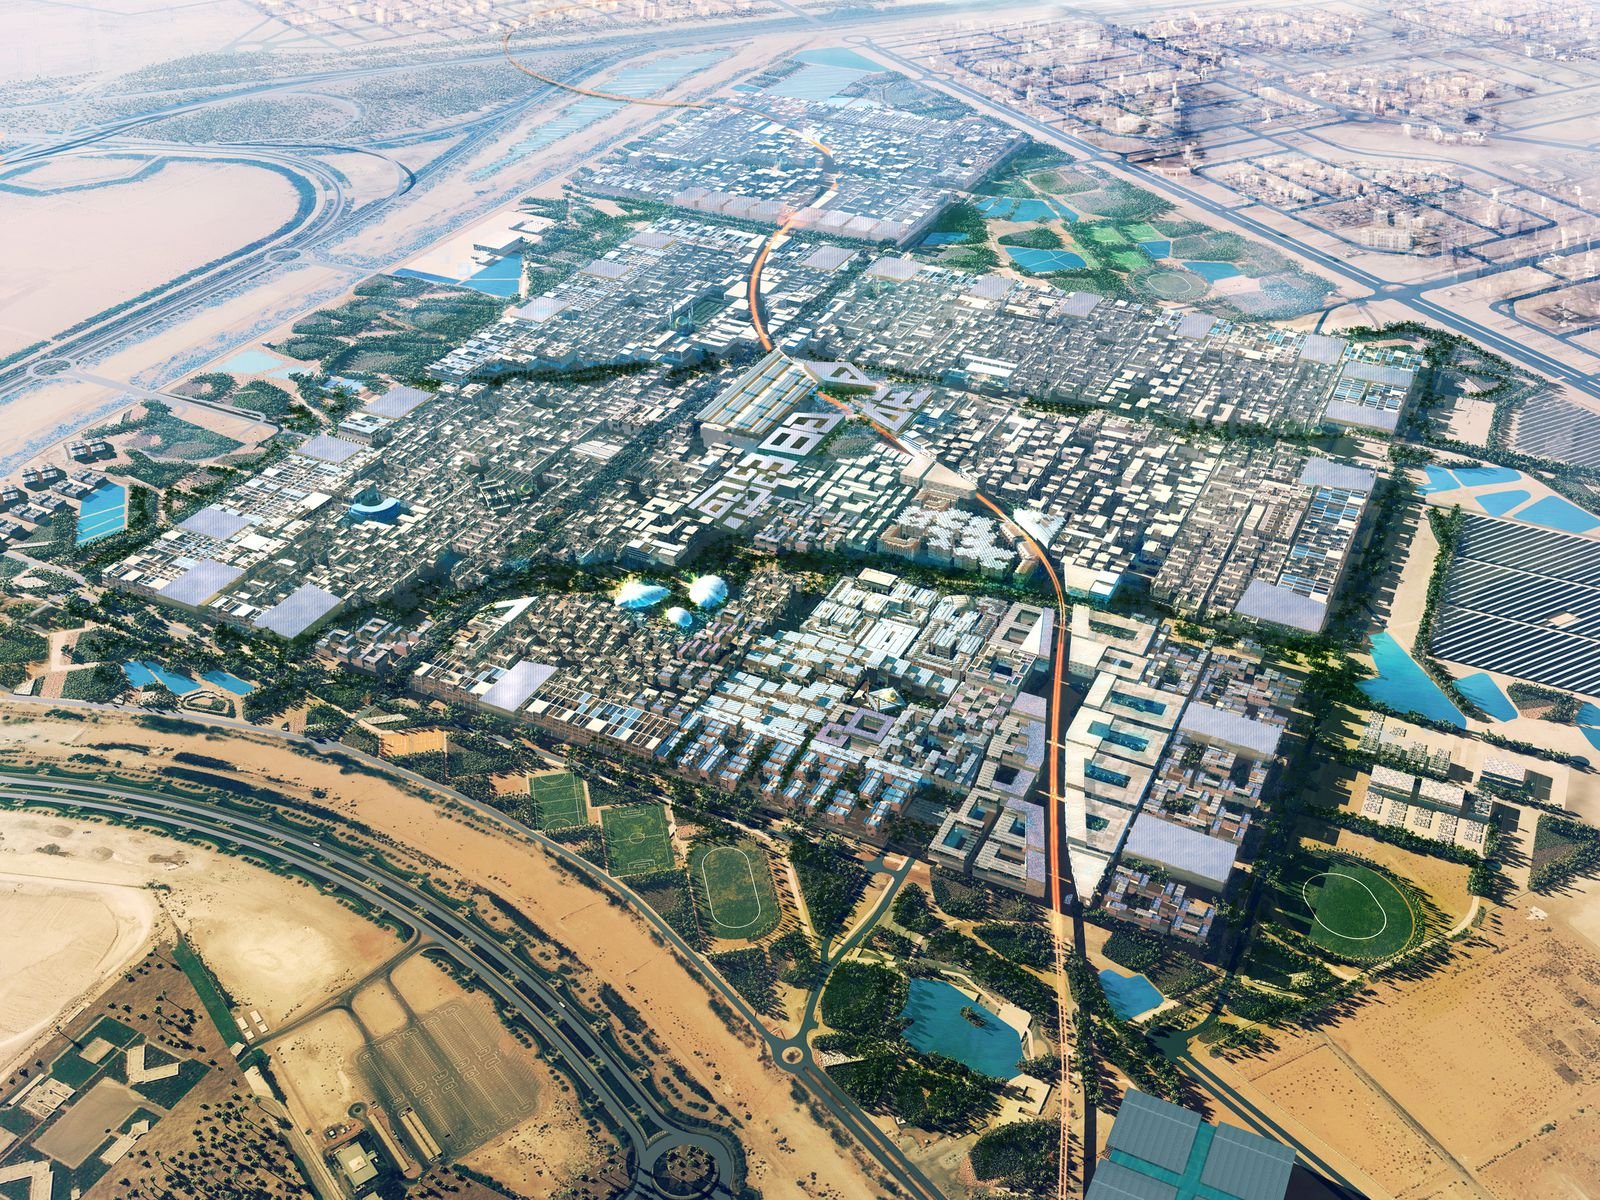 Overlay of the Masdar City